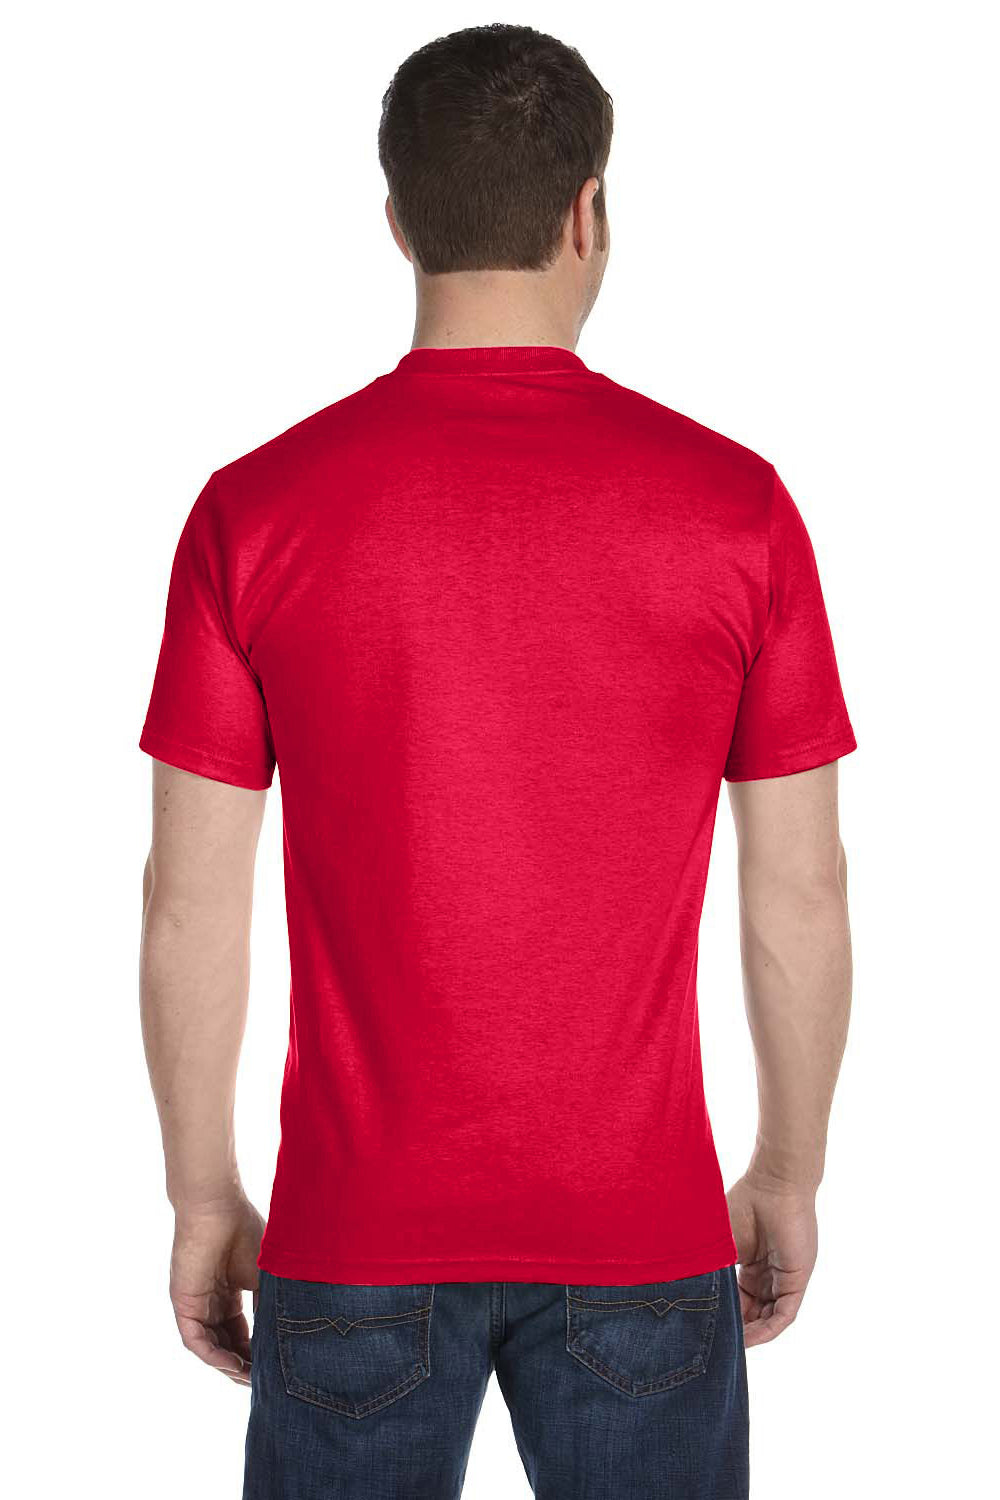 Gildan G800 Mens DryBlend Moisture Wicking Short Sleeve Crewneck T-Shirt Scarlet Red Back